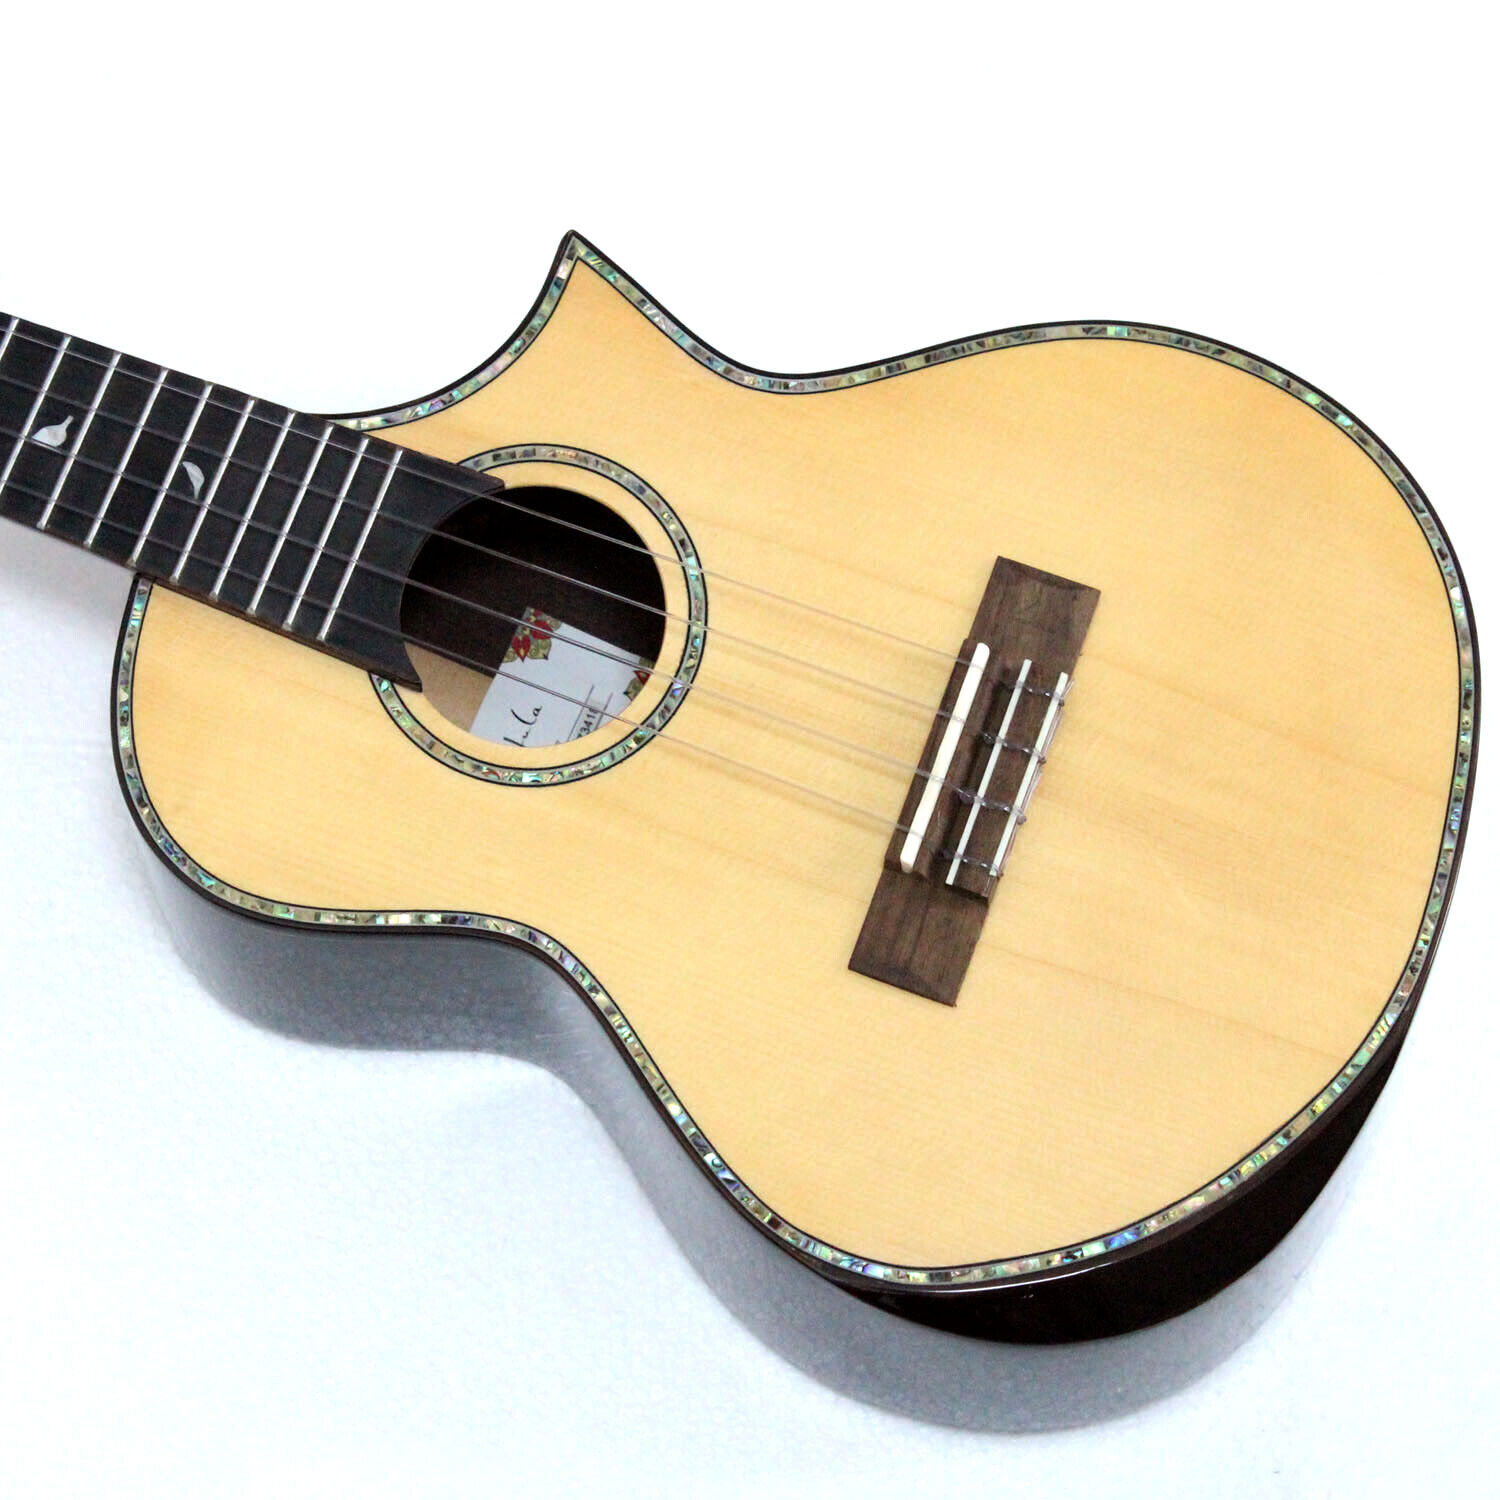 21 Inch Professional Acoustic Ukelele Four String Wooden For Beginner Kit W/ Bag 7